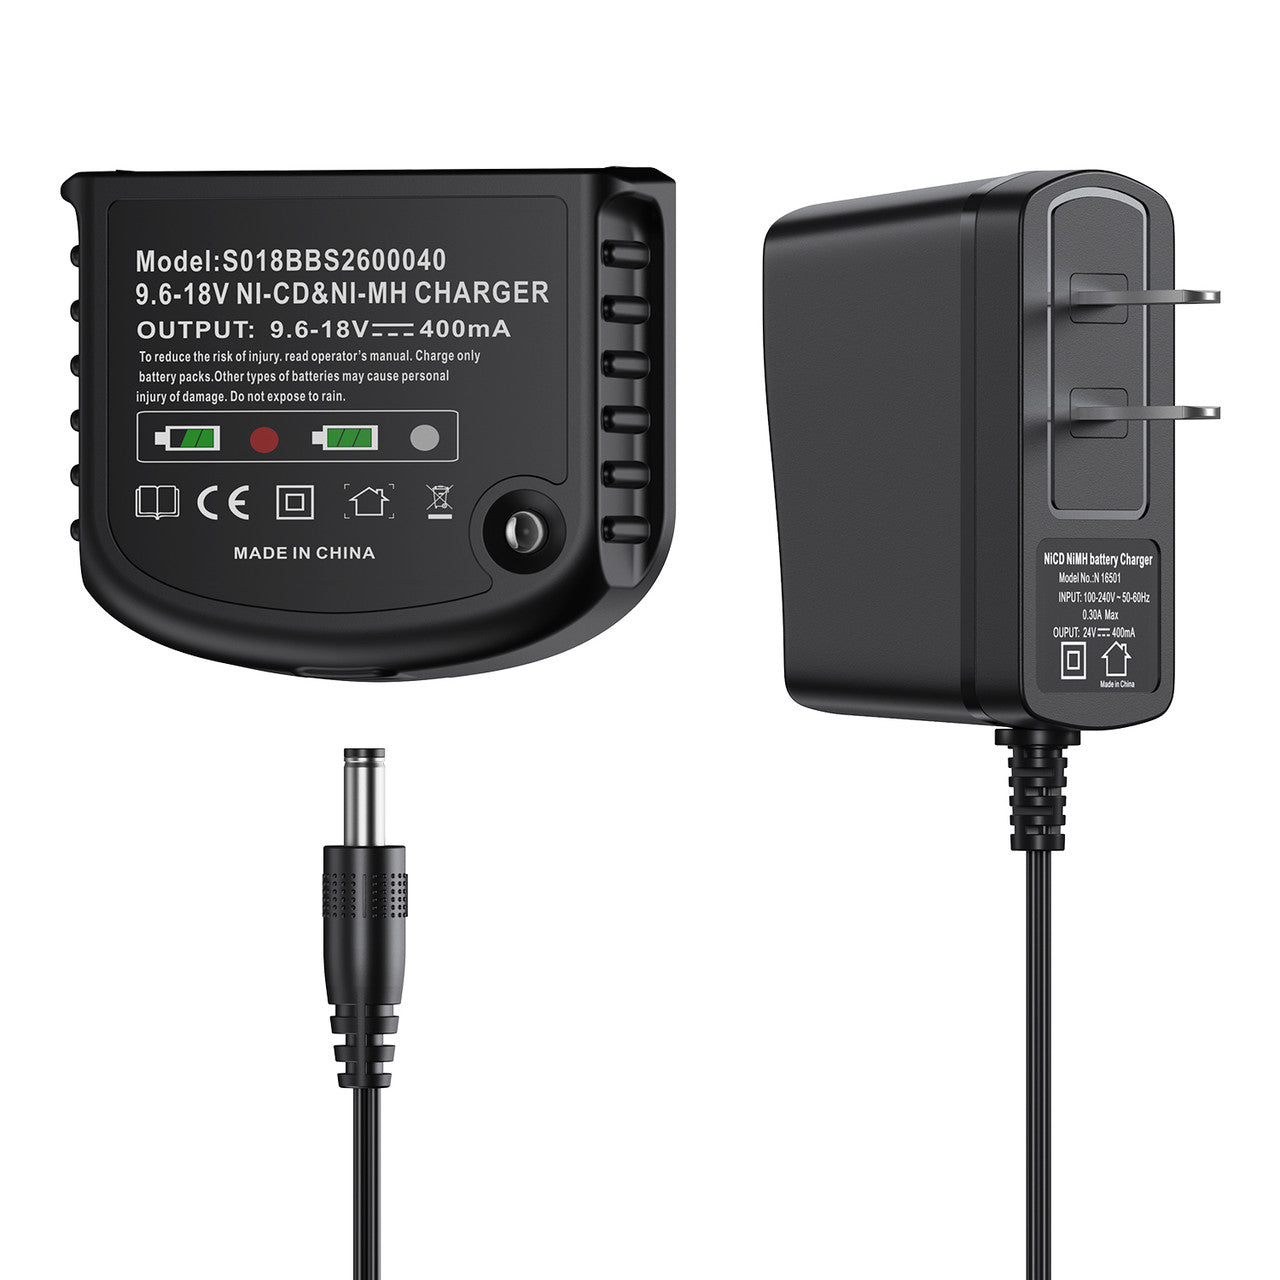 Black & Decker Porter Cable Stanley Power Adapters 10.8v/14.4v/18v/20v  Lithium-ion Battery Charger